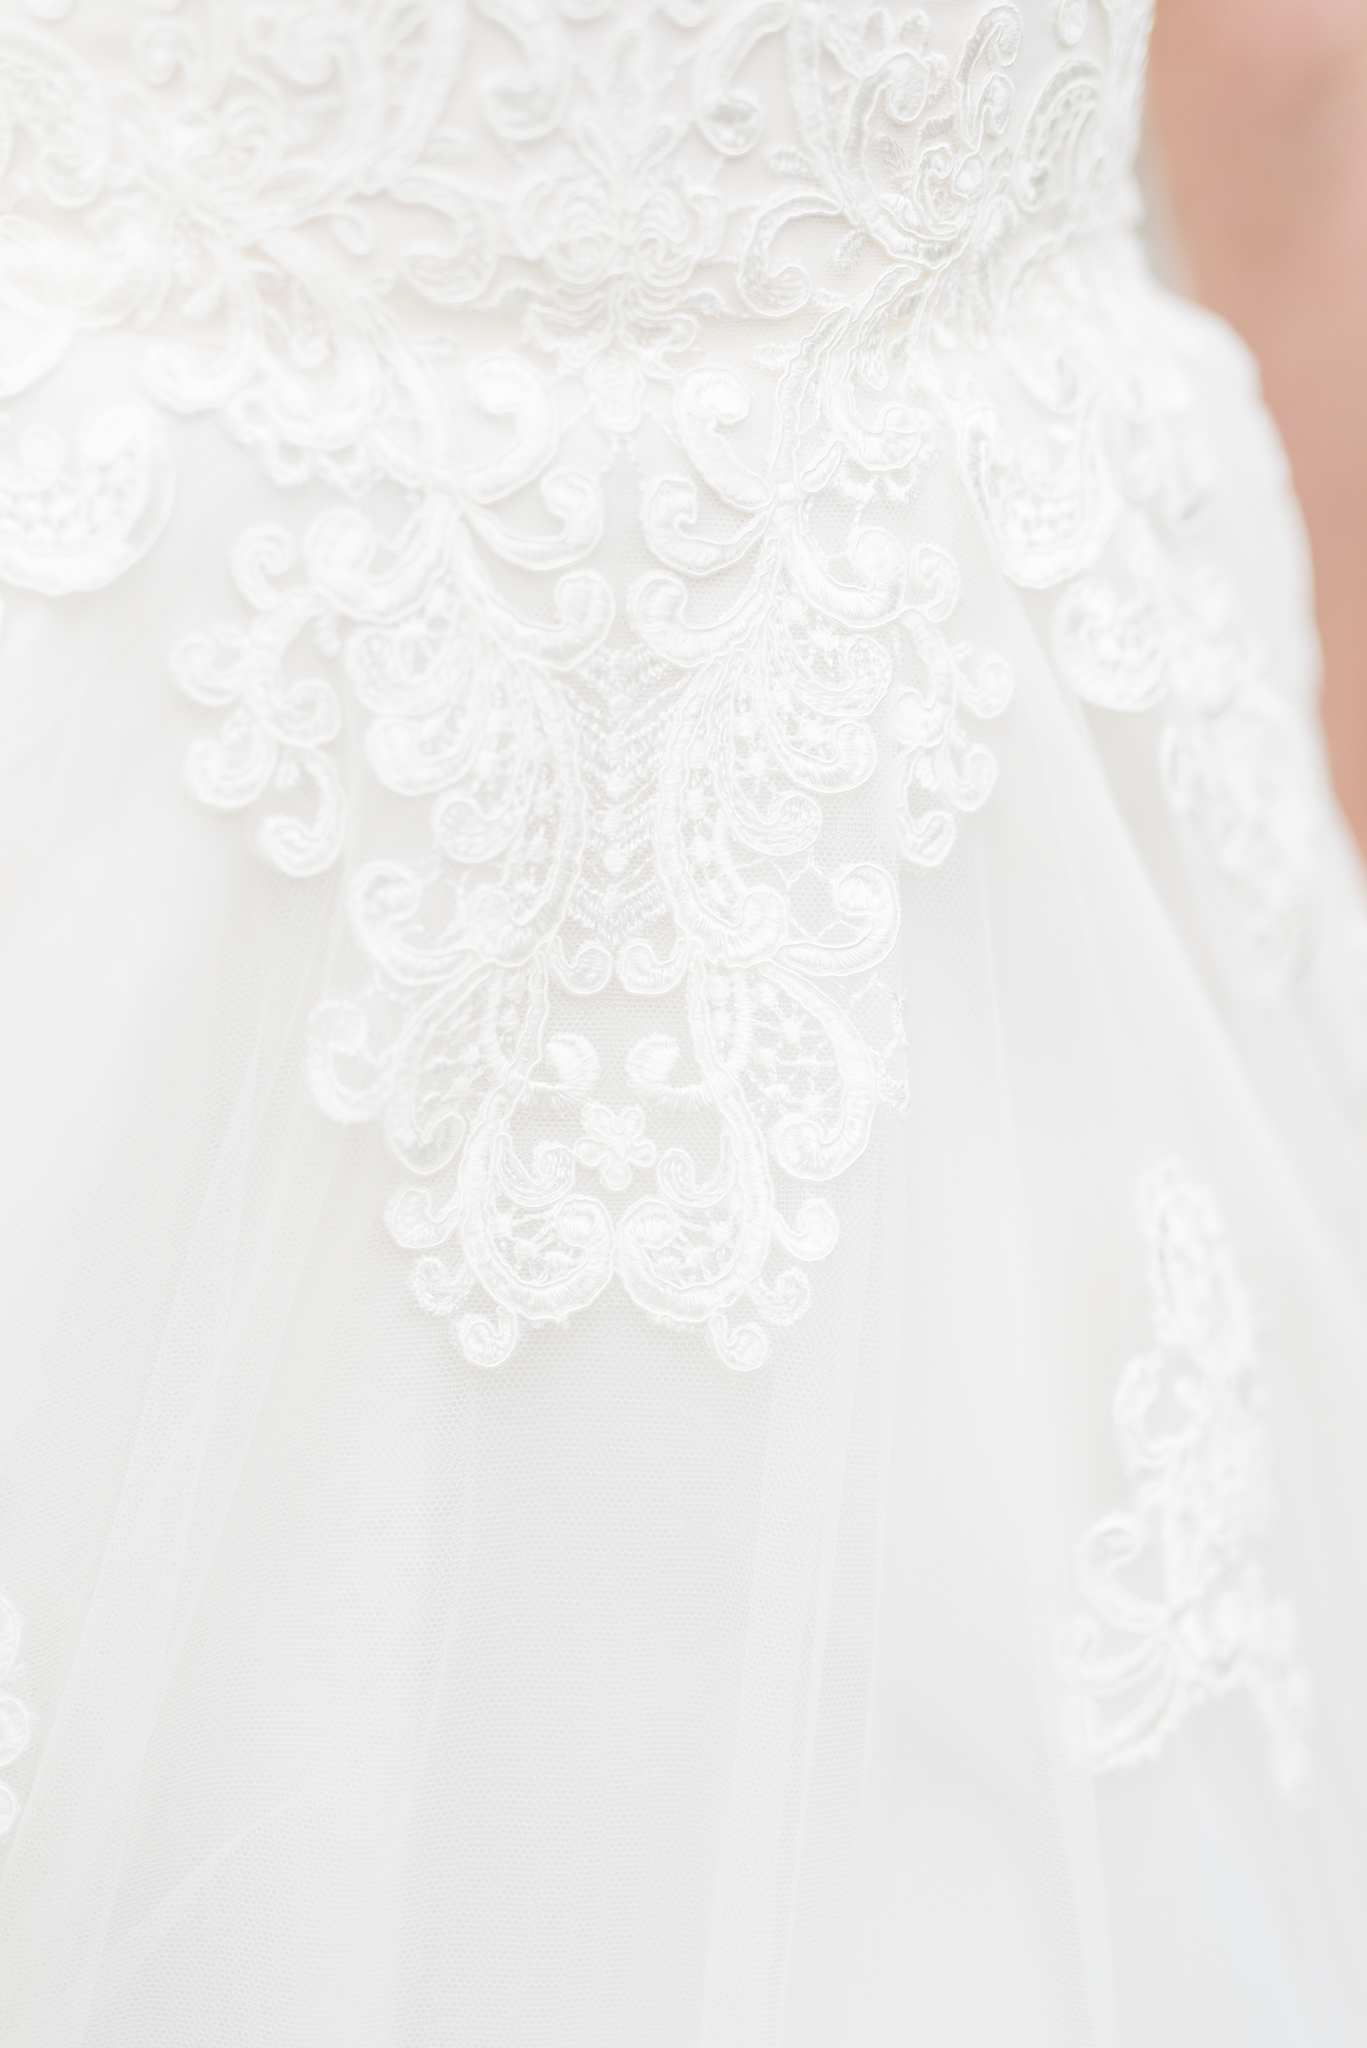 Lace on wedding dress.